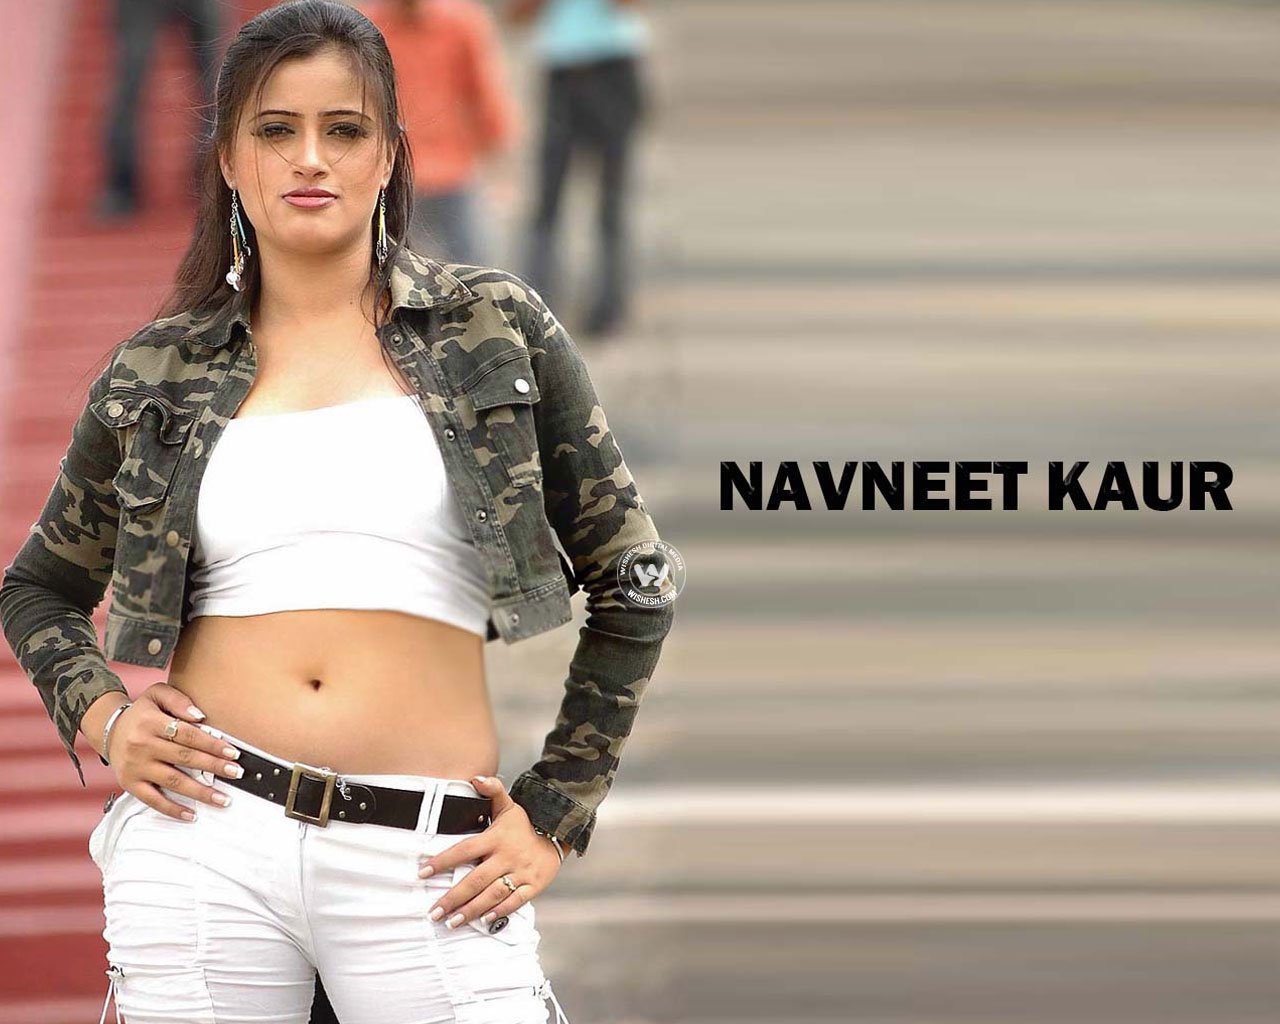 download Navneet Kaur south indian actress wallpaper in hd